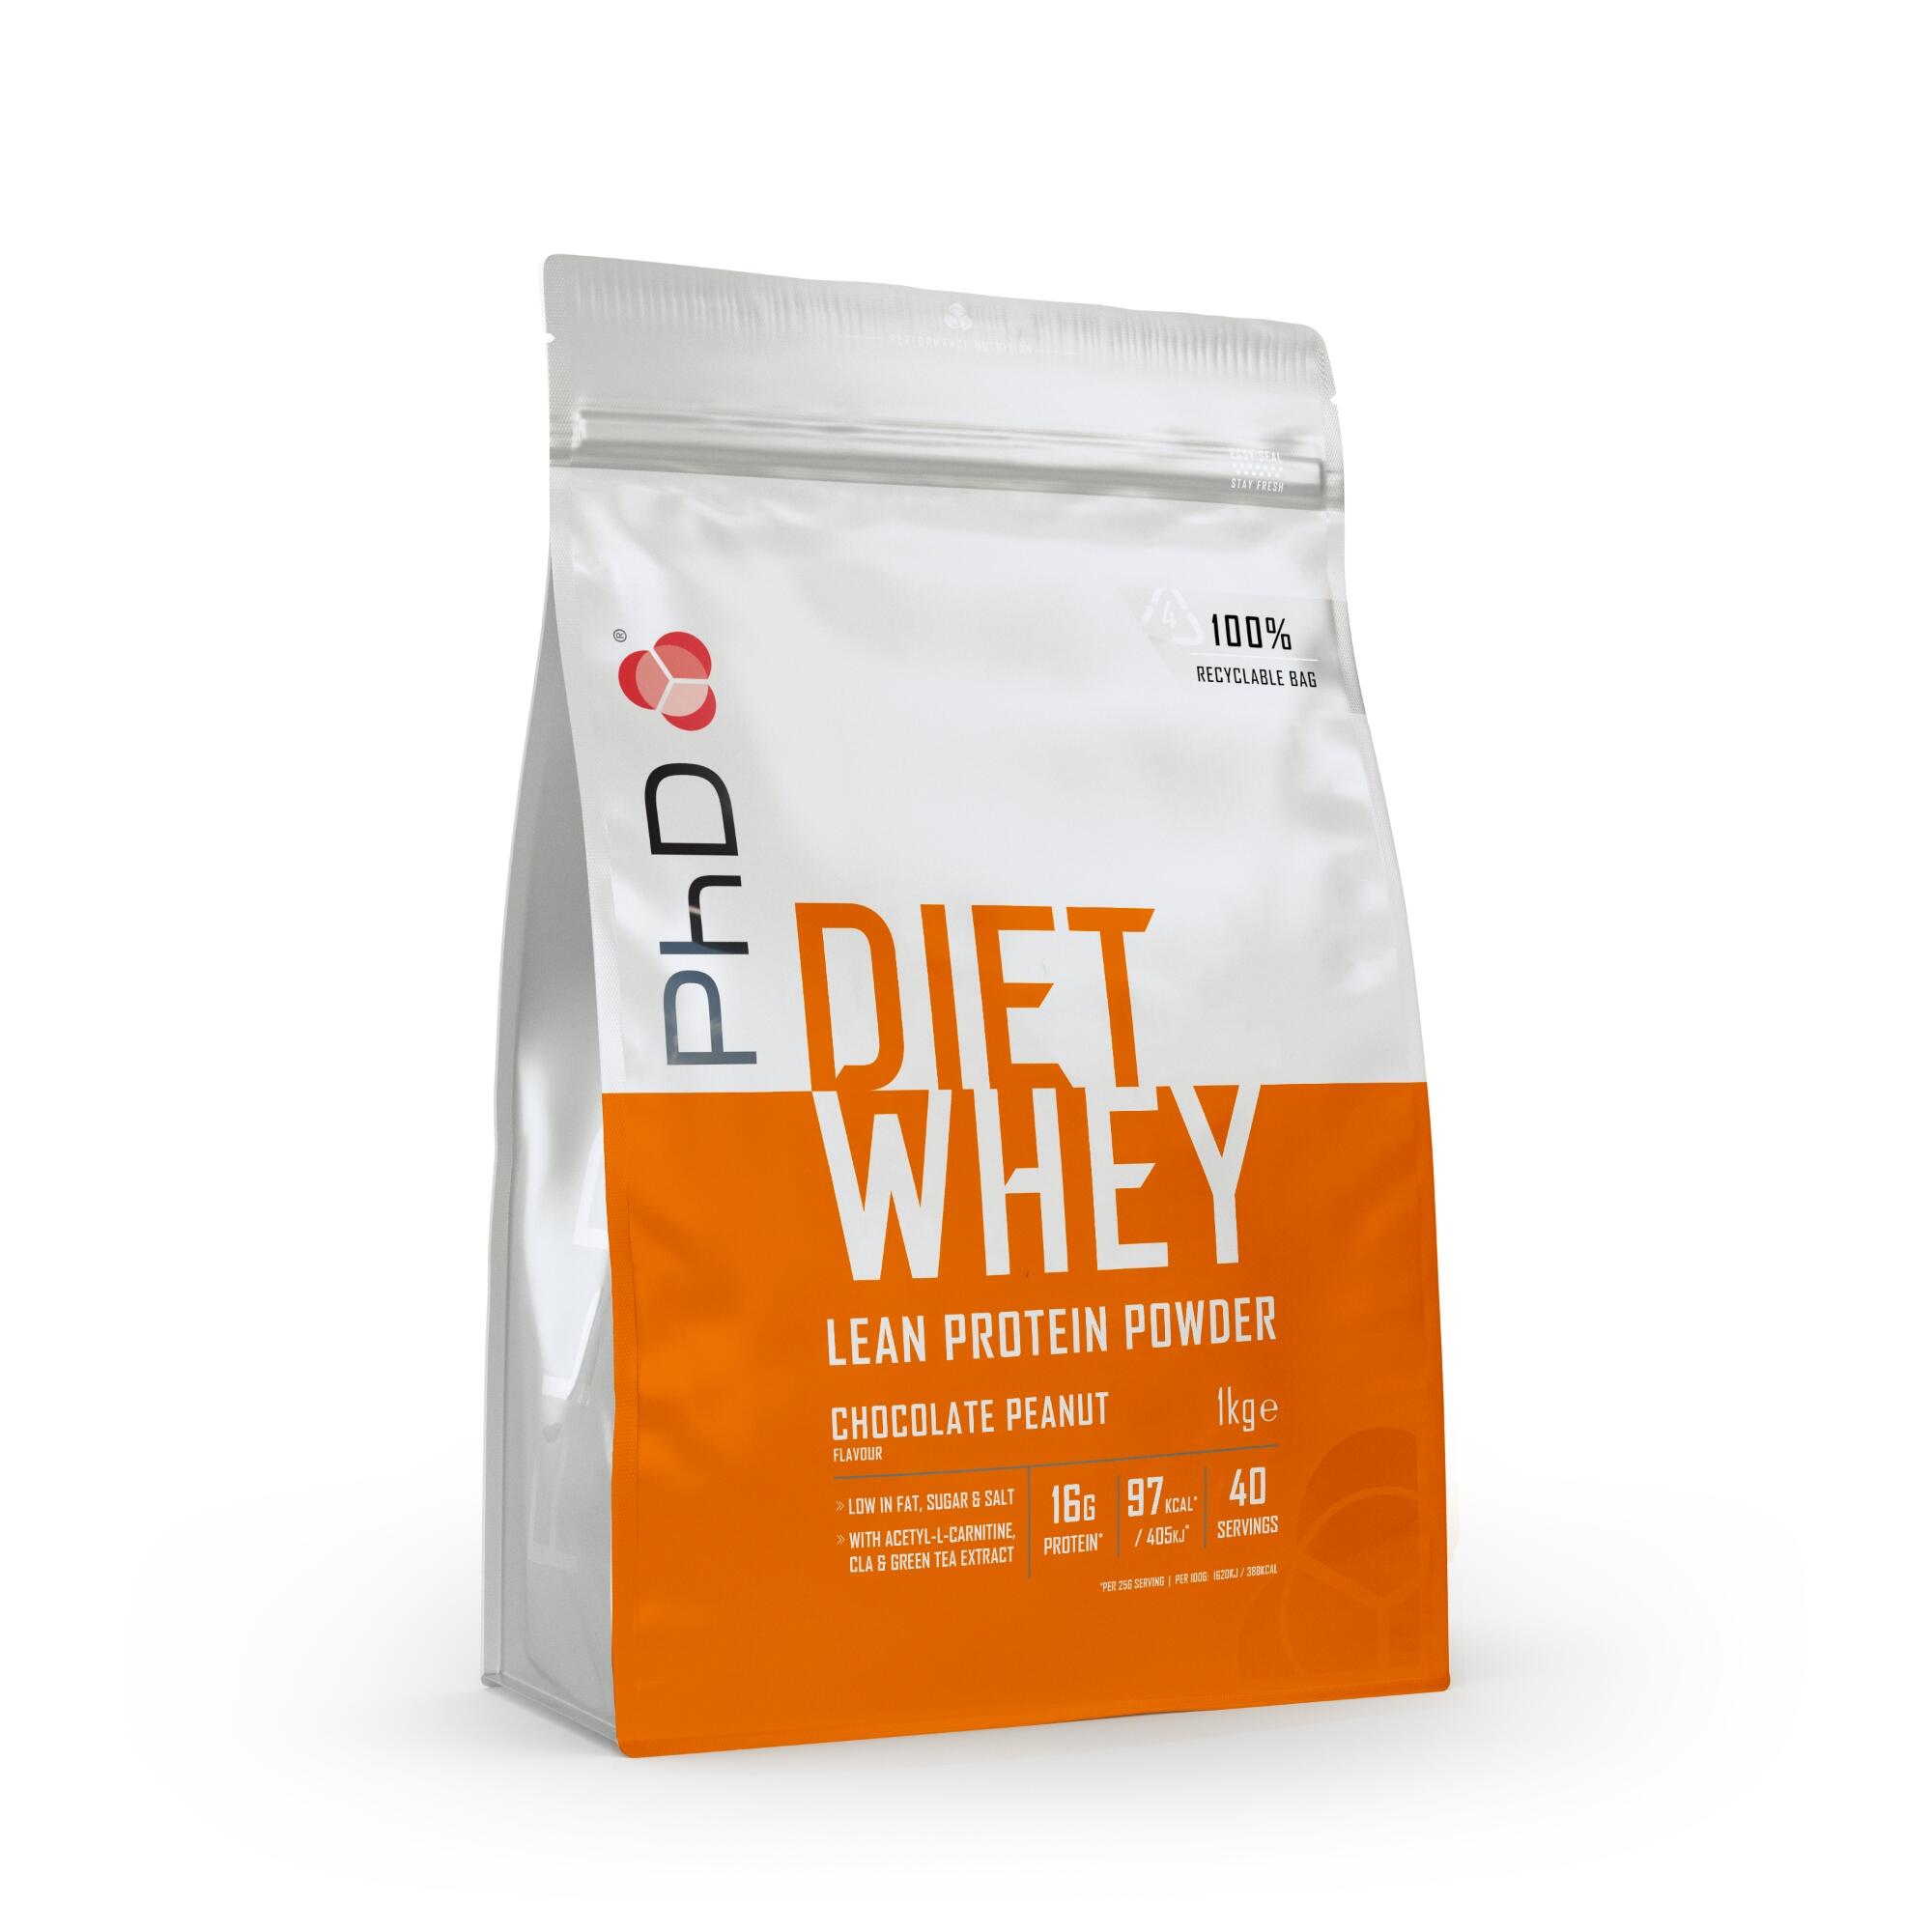 PHD NUTRITION PhD Nutrition | Diet Whey Powder | Chocolate Peanut Flavour | 1kg